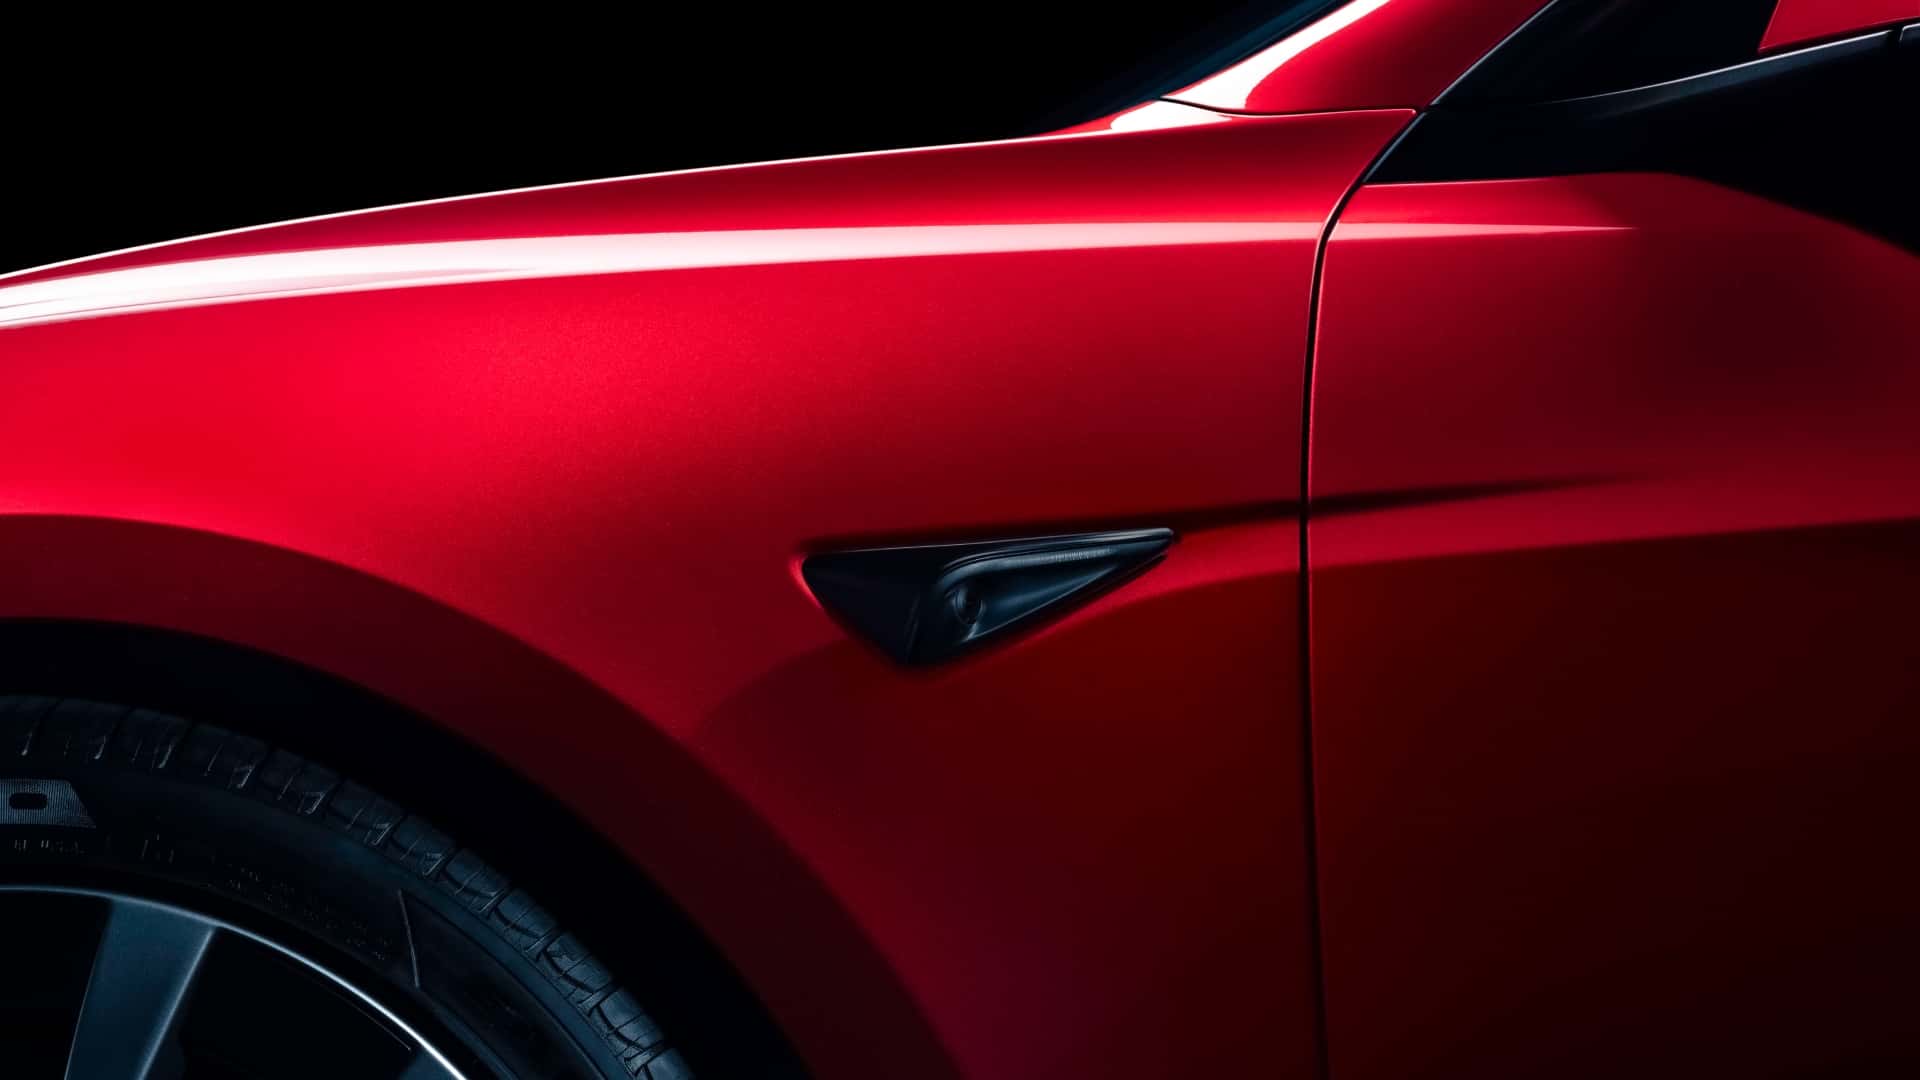 The new Tesla Model 3 is here with better looks, longer range